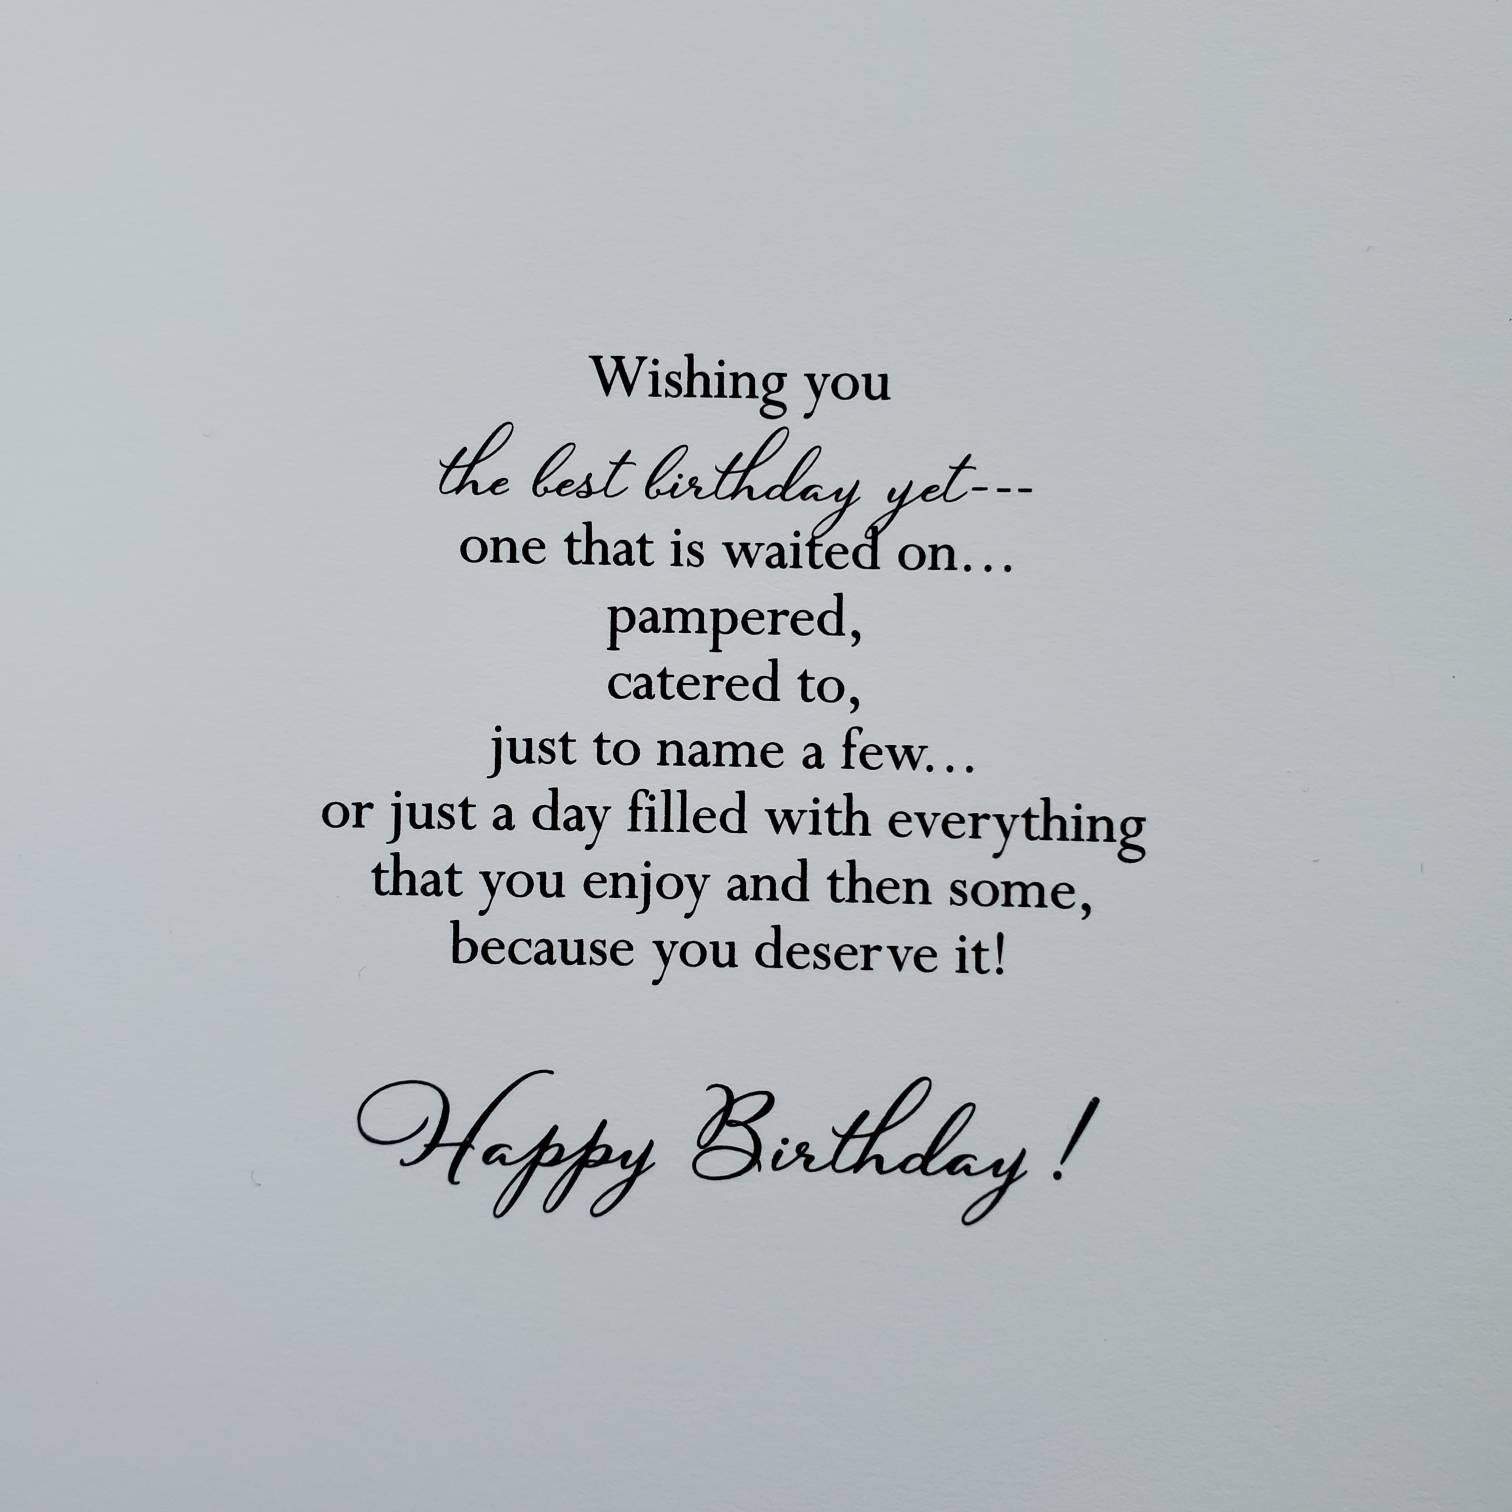 A Very Happy Birthday Card